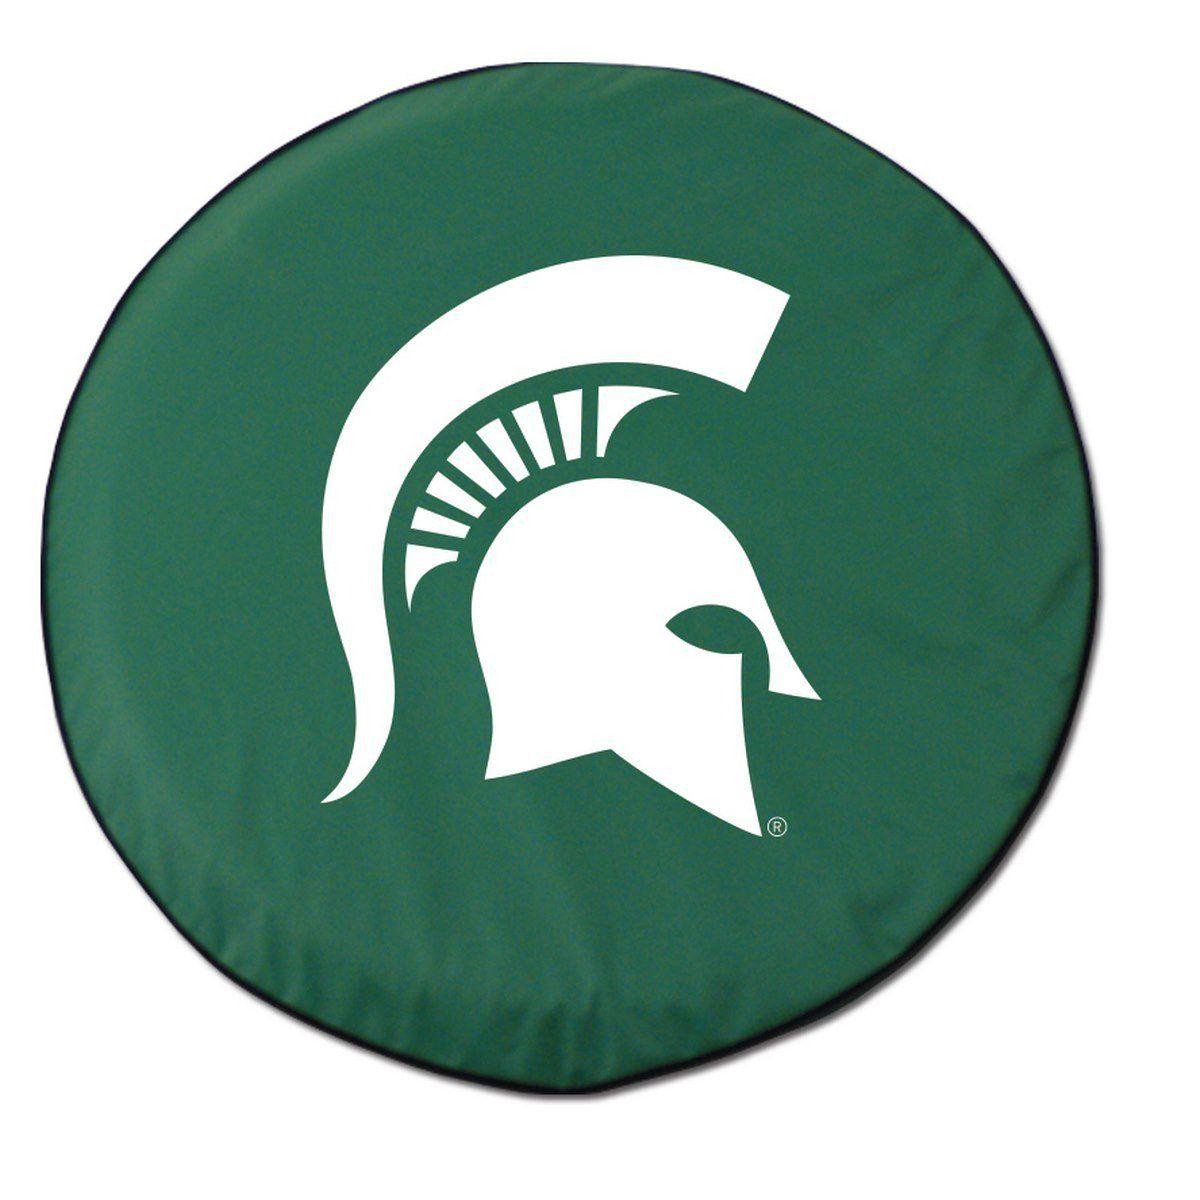 Green Spartan Logo - Amazon.com : Michigan State University Tire Cover with Spartan logo